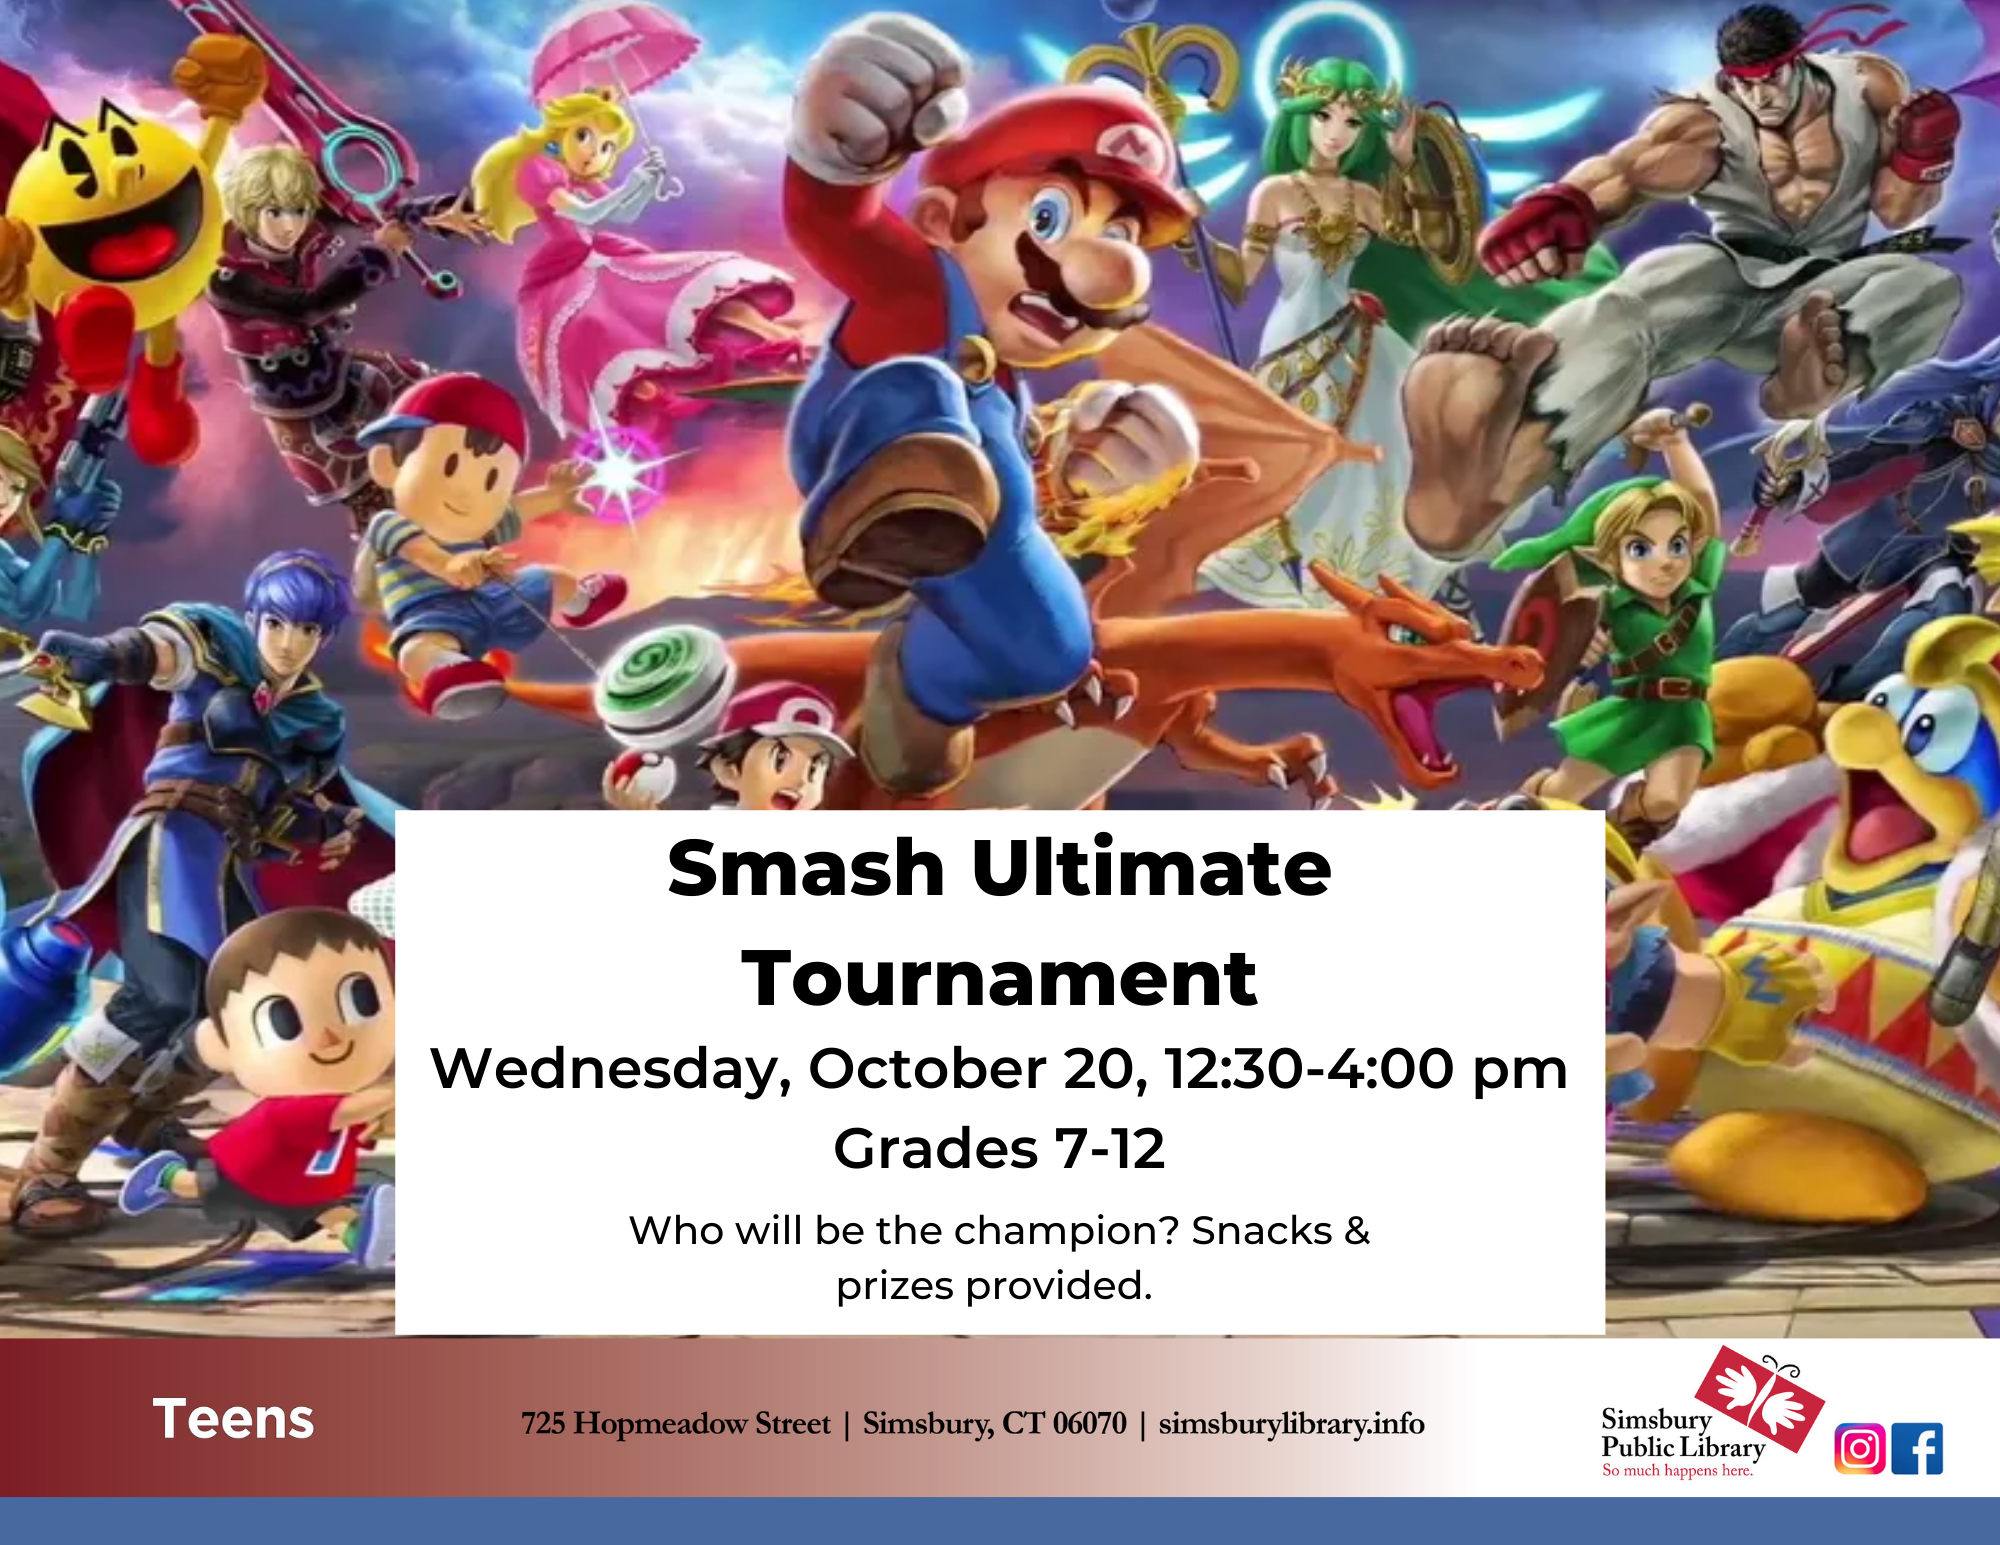 Smash Tournament